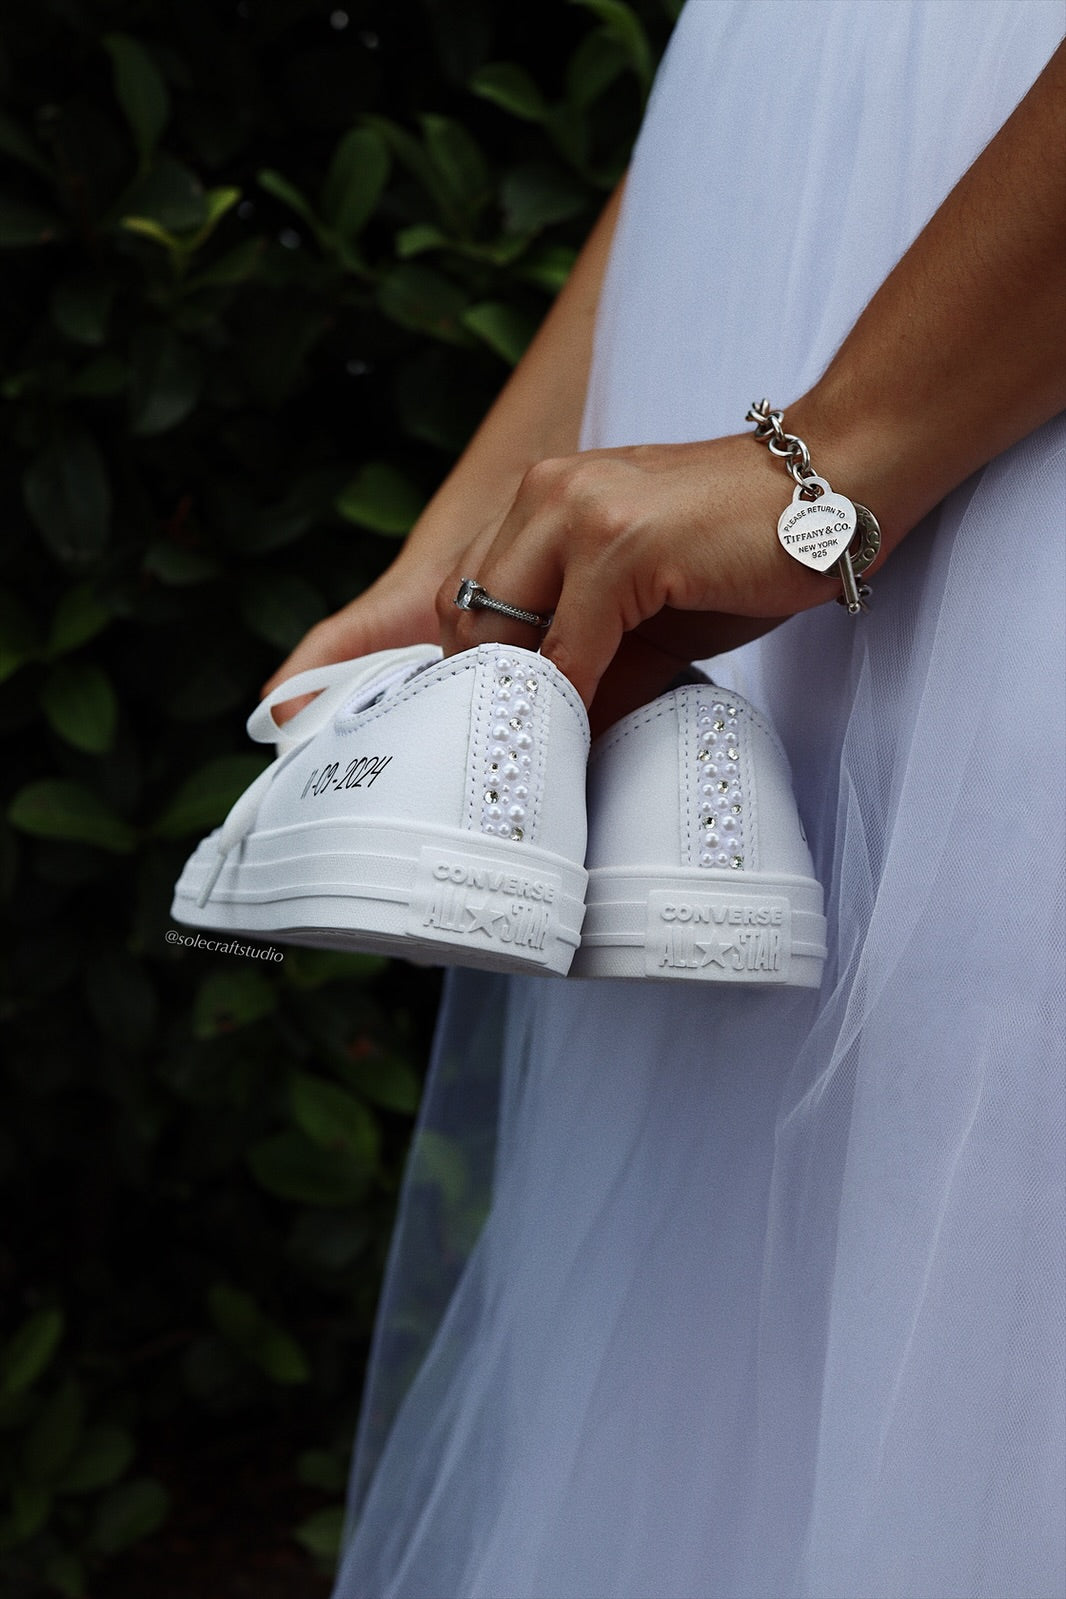 White Wedding Sneakers | Low Top Shoes | solecraftstudio